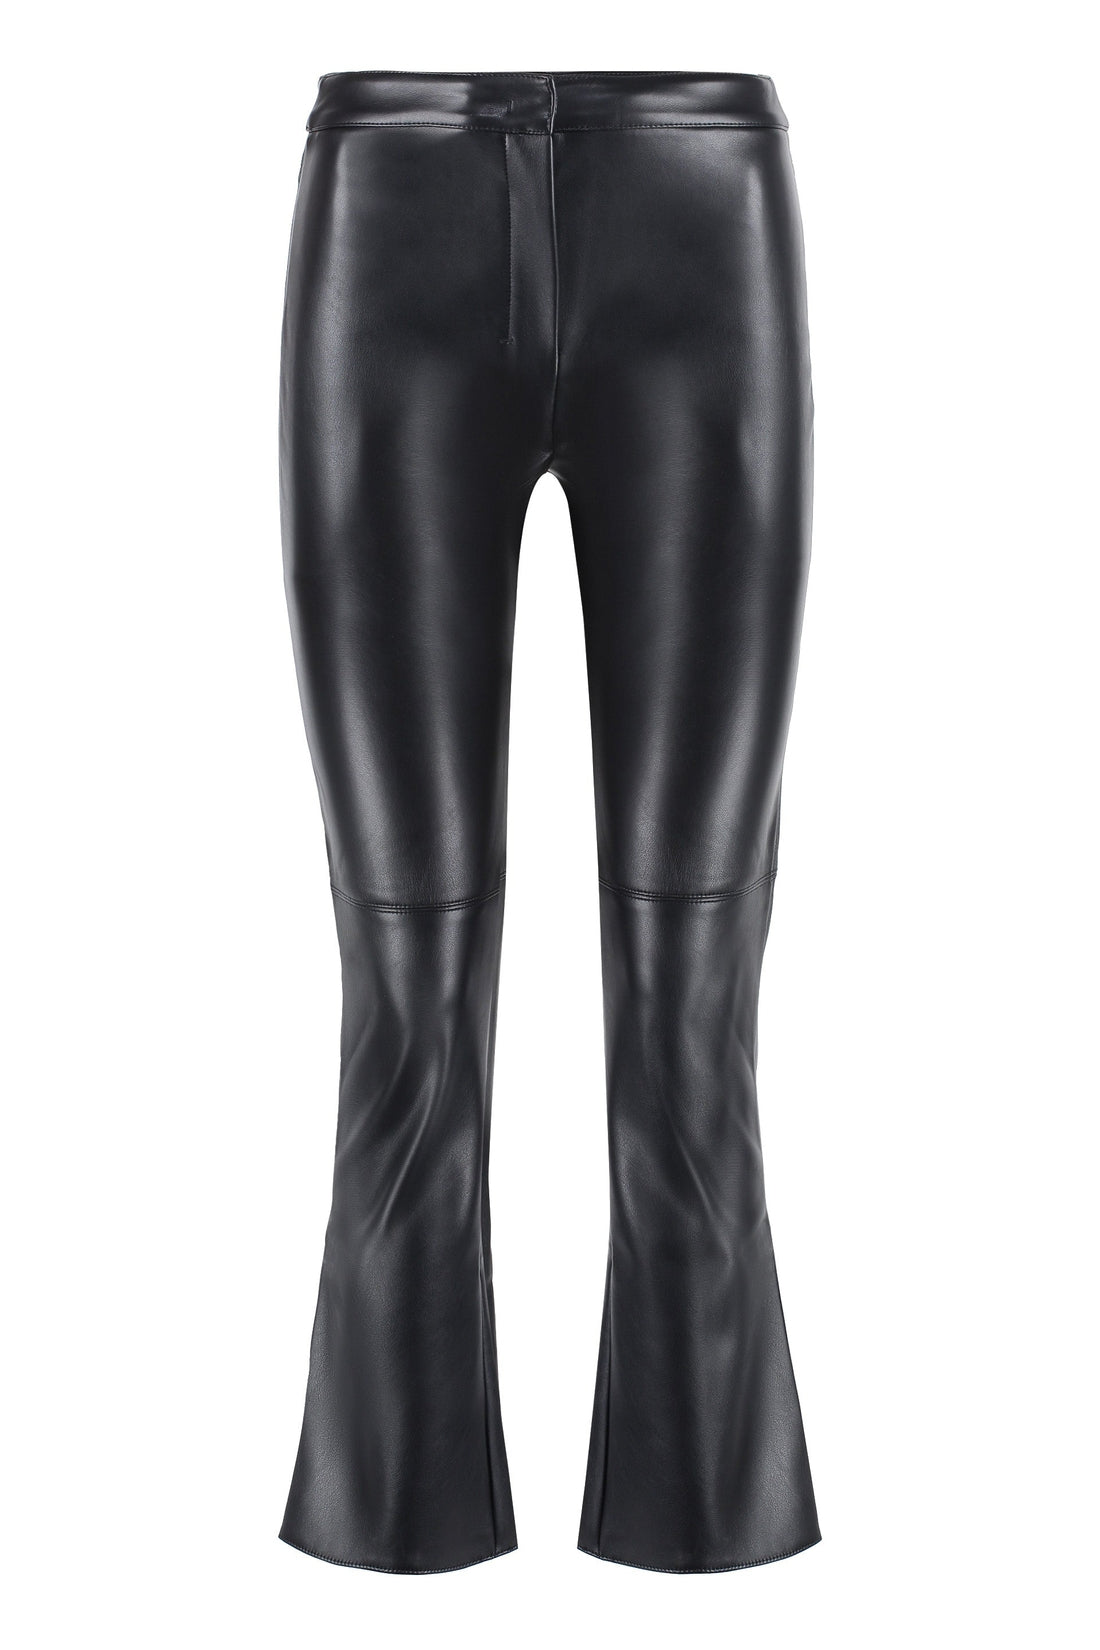 S MAX MARA-OUTLET-SALE-Karub vegan leather trousers-ARCHIVIST